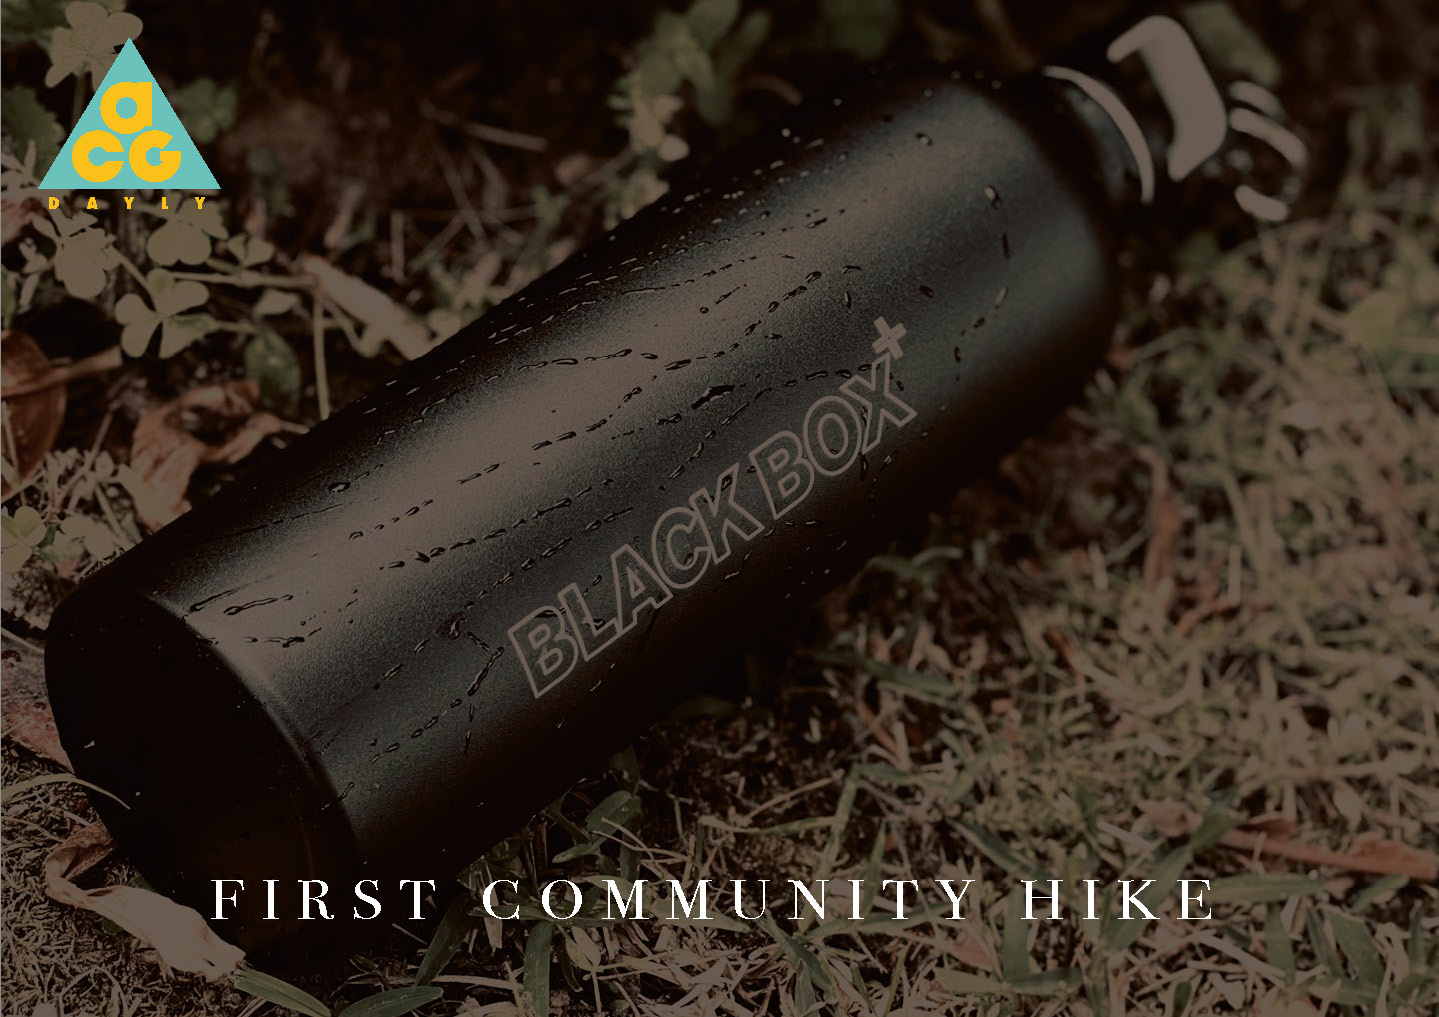 Black Box x ACG Daily “First Community Hike”